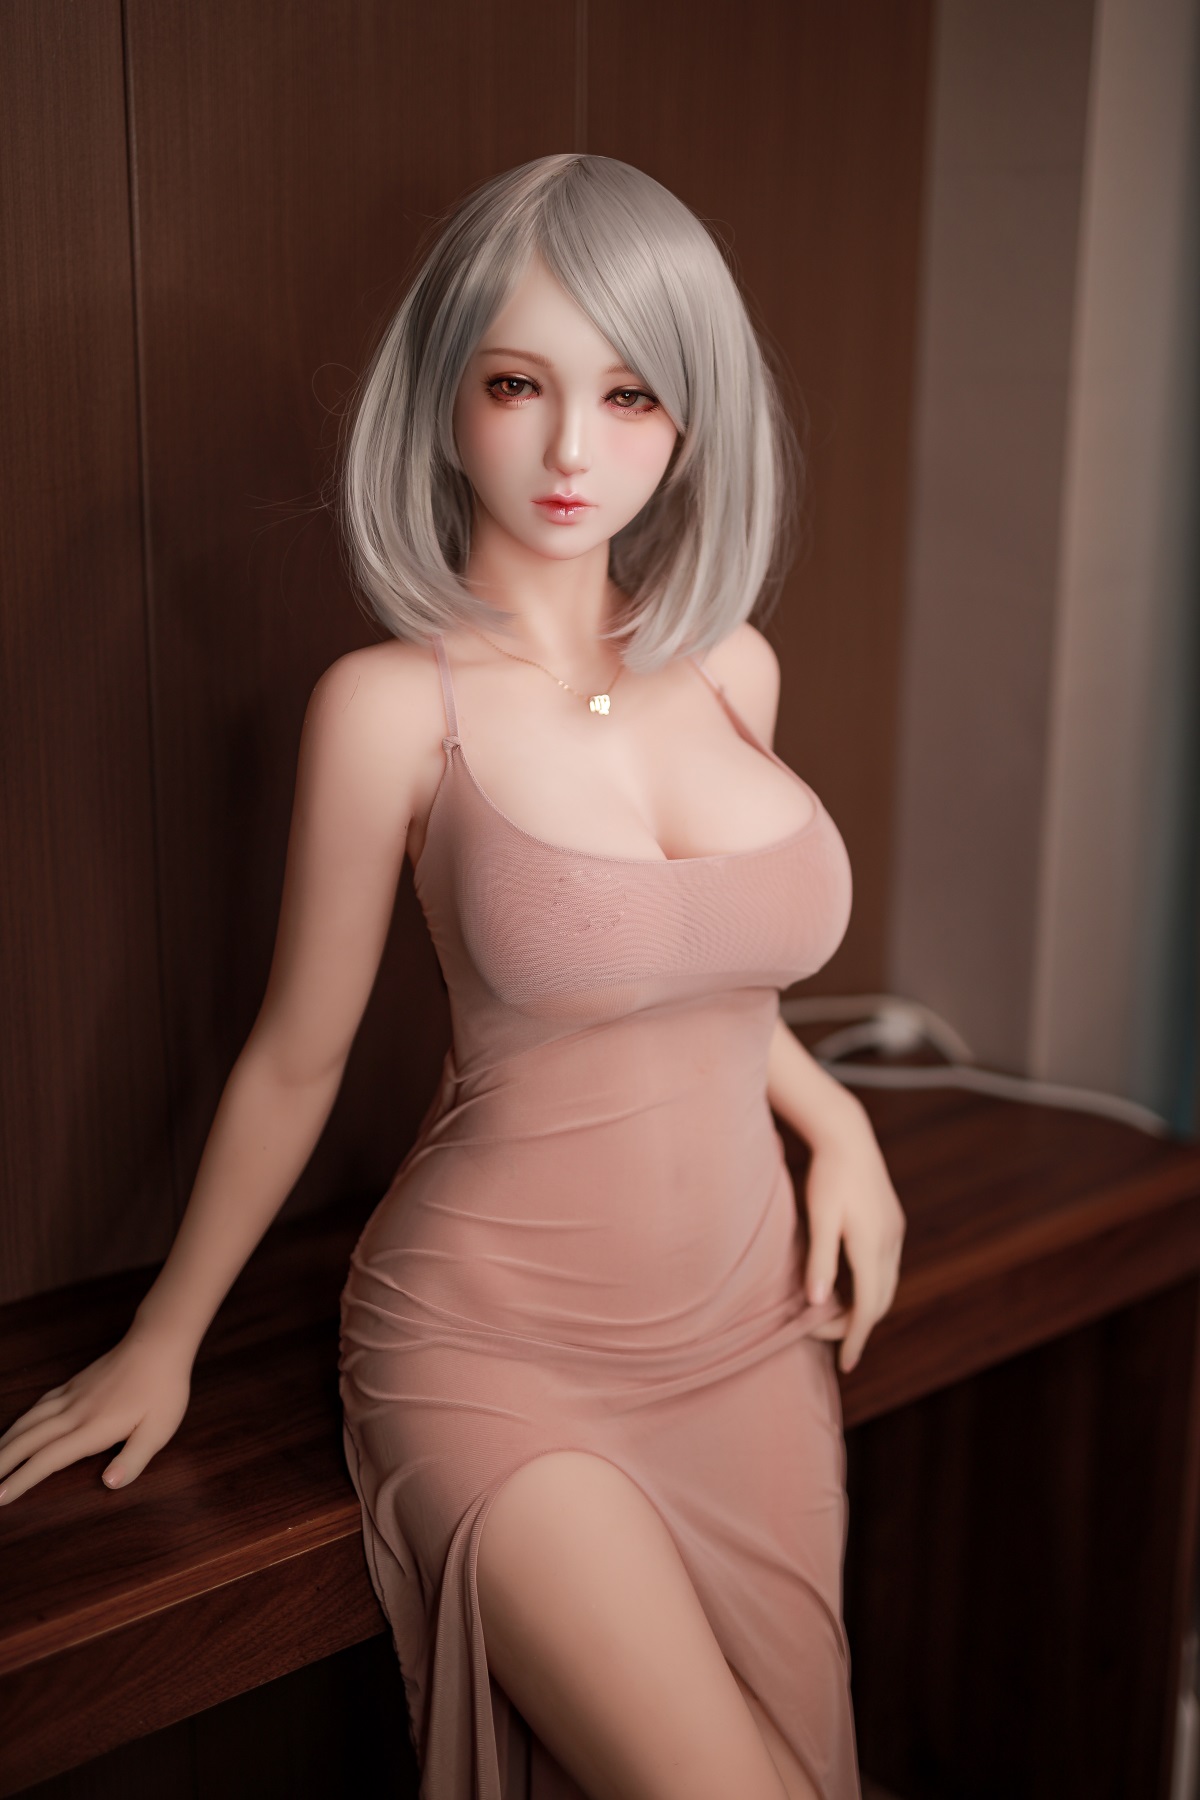 Yumii - 5ft 5 / 166cm Short hear Sex Doll With Silicone Head